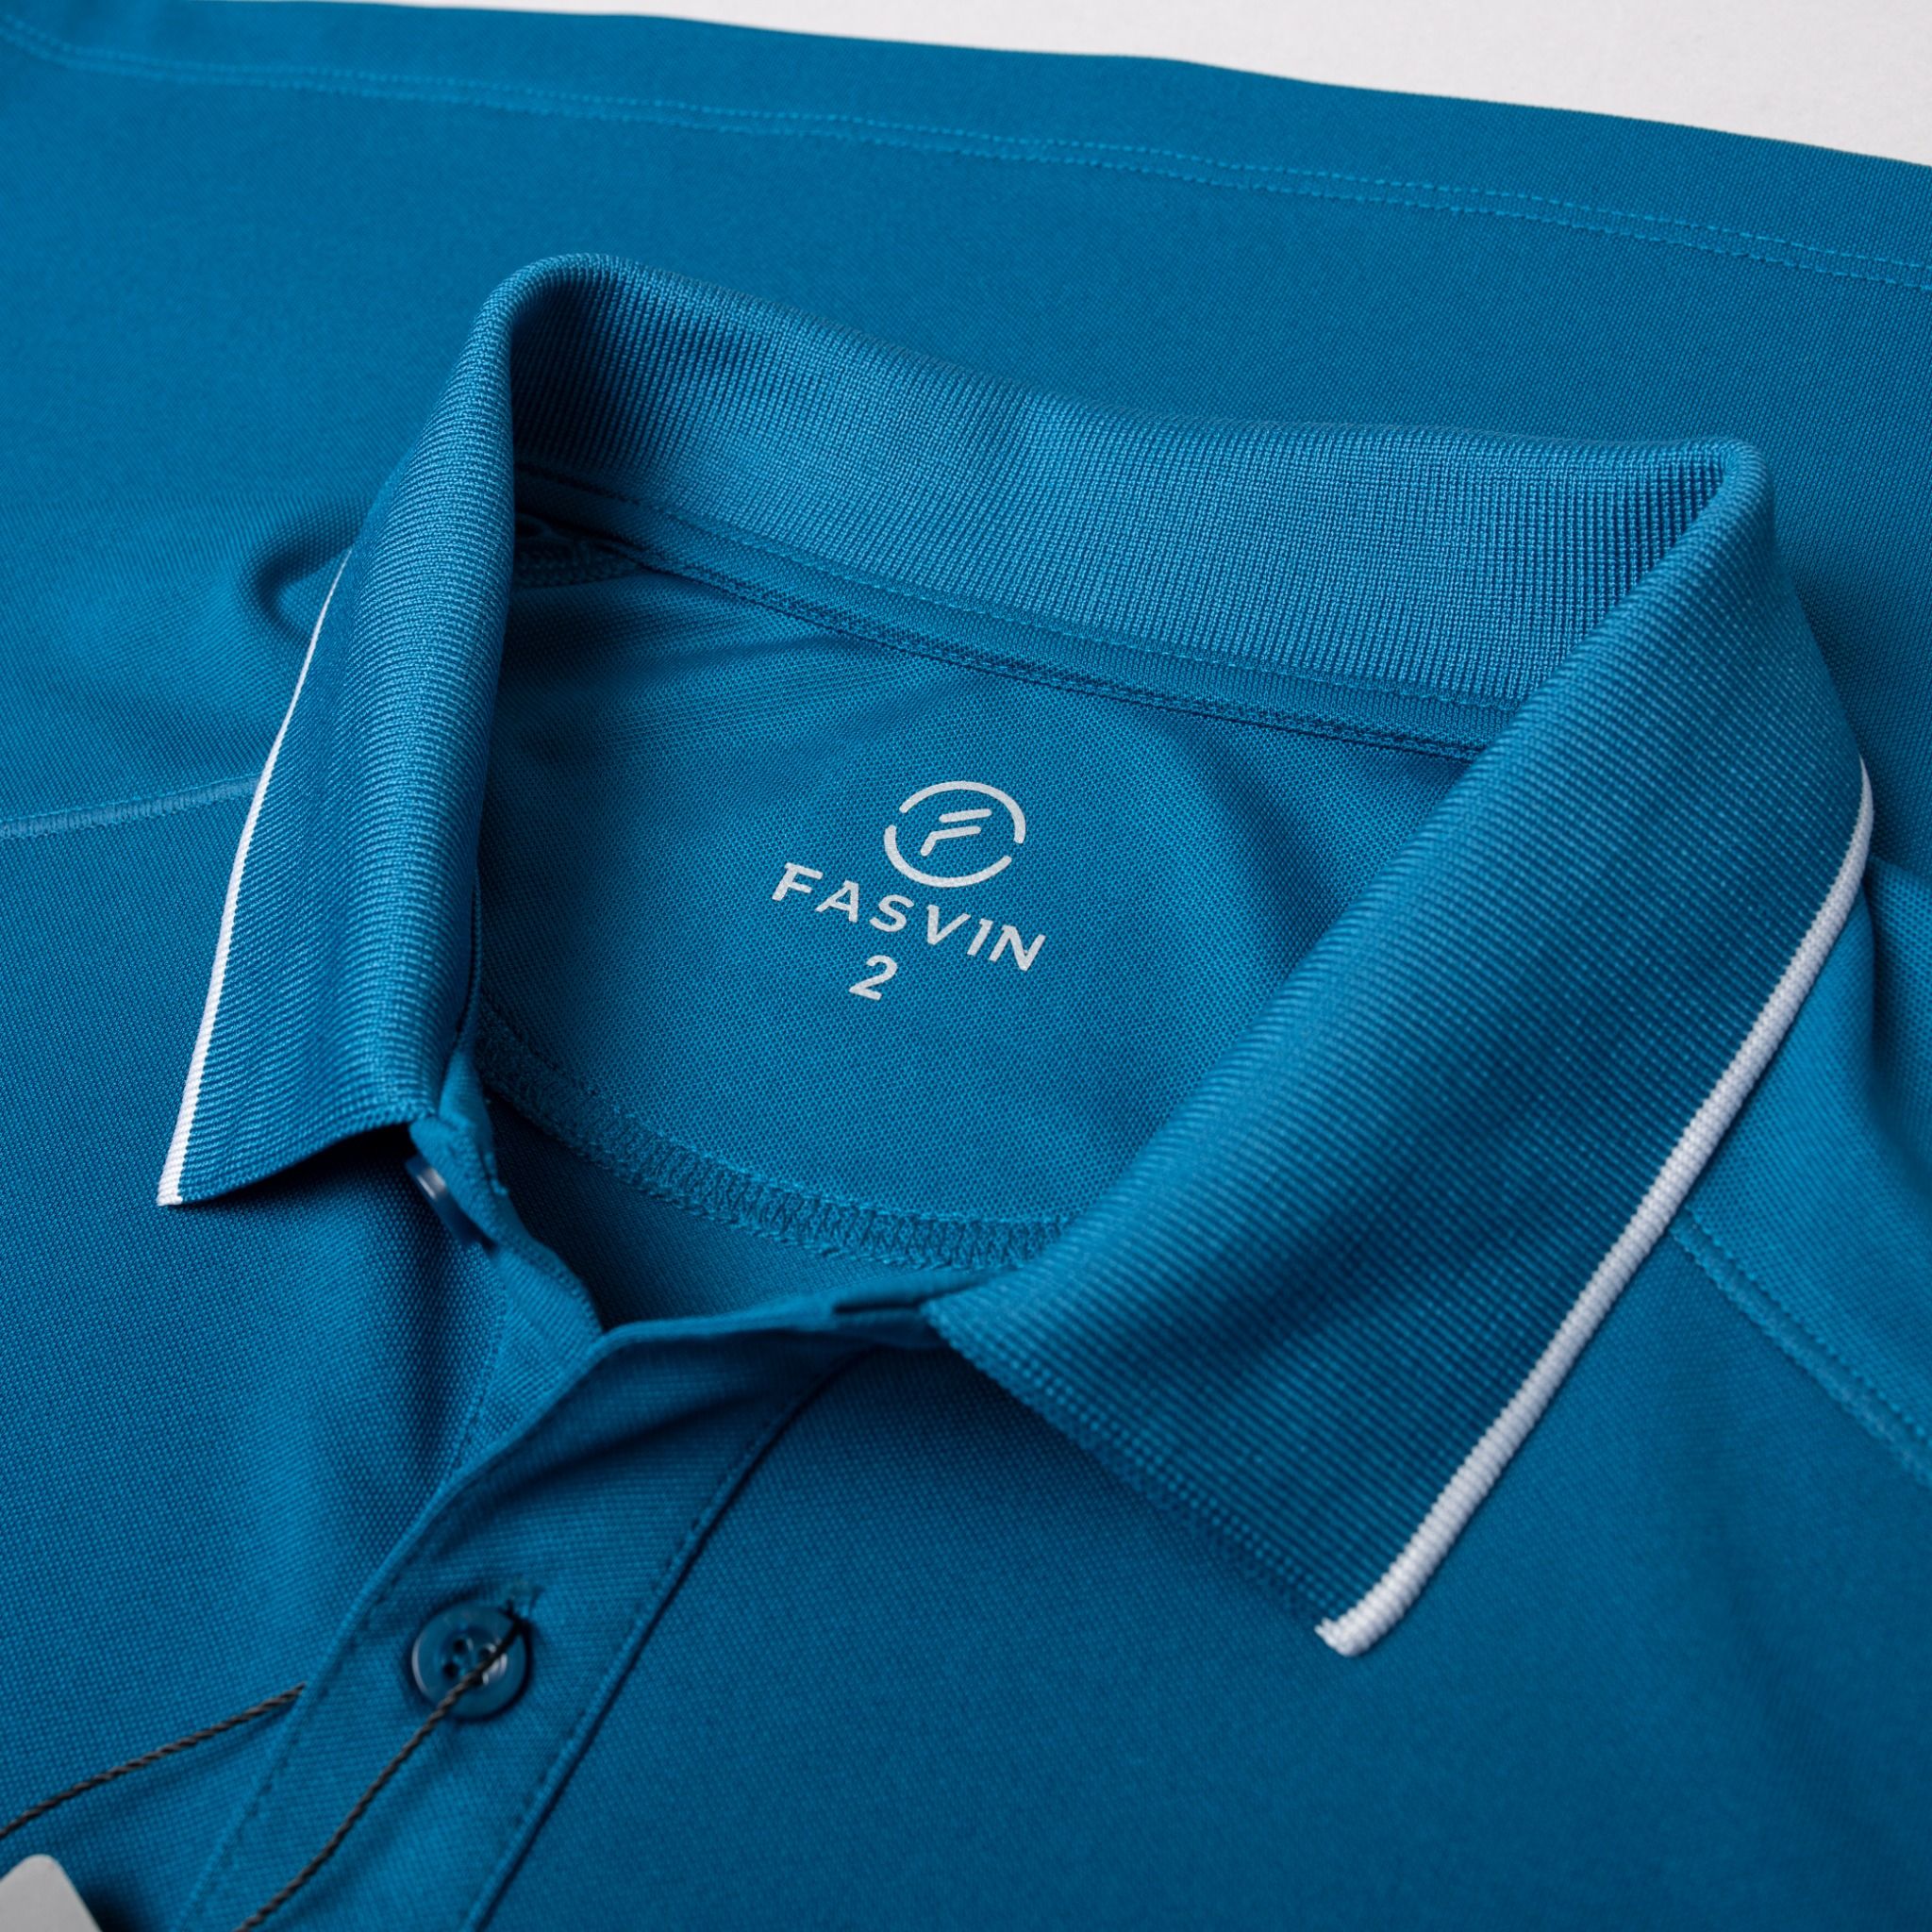  Áo Polo thể thao nam Fasvin PL23568 áo polo vải coolmax thoáng mát 